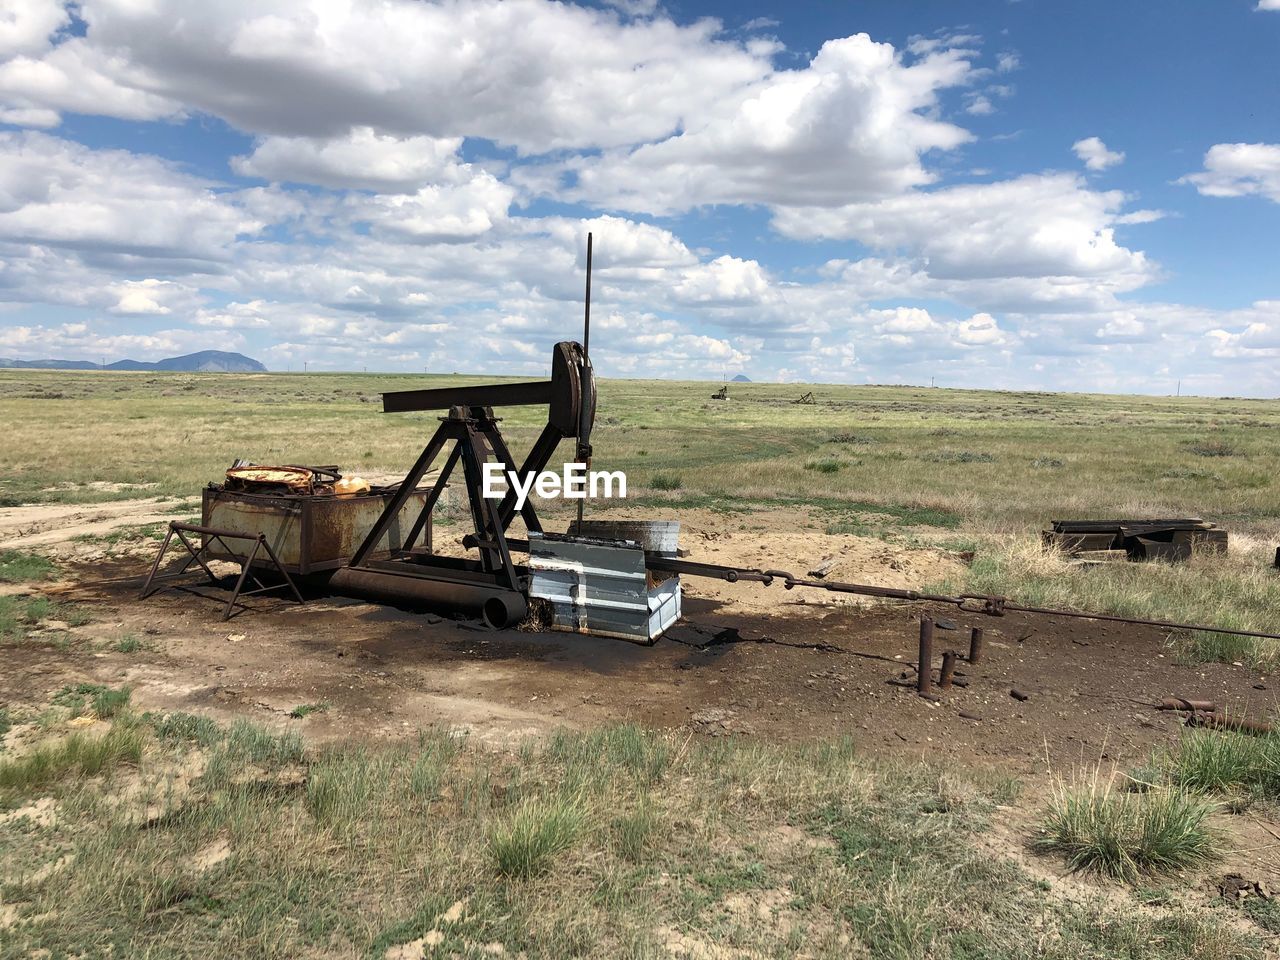 Oil well at sunburst montana usa